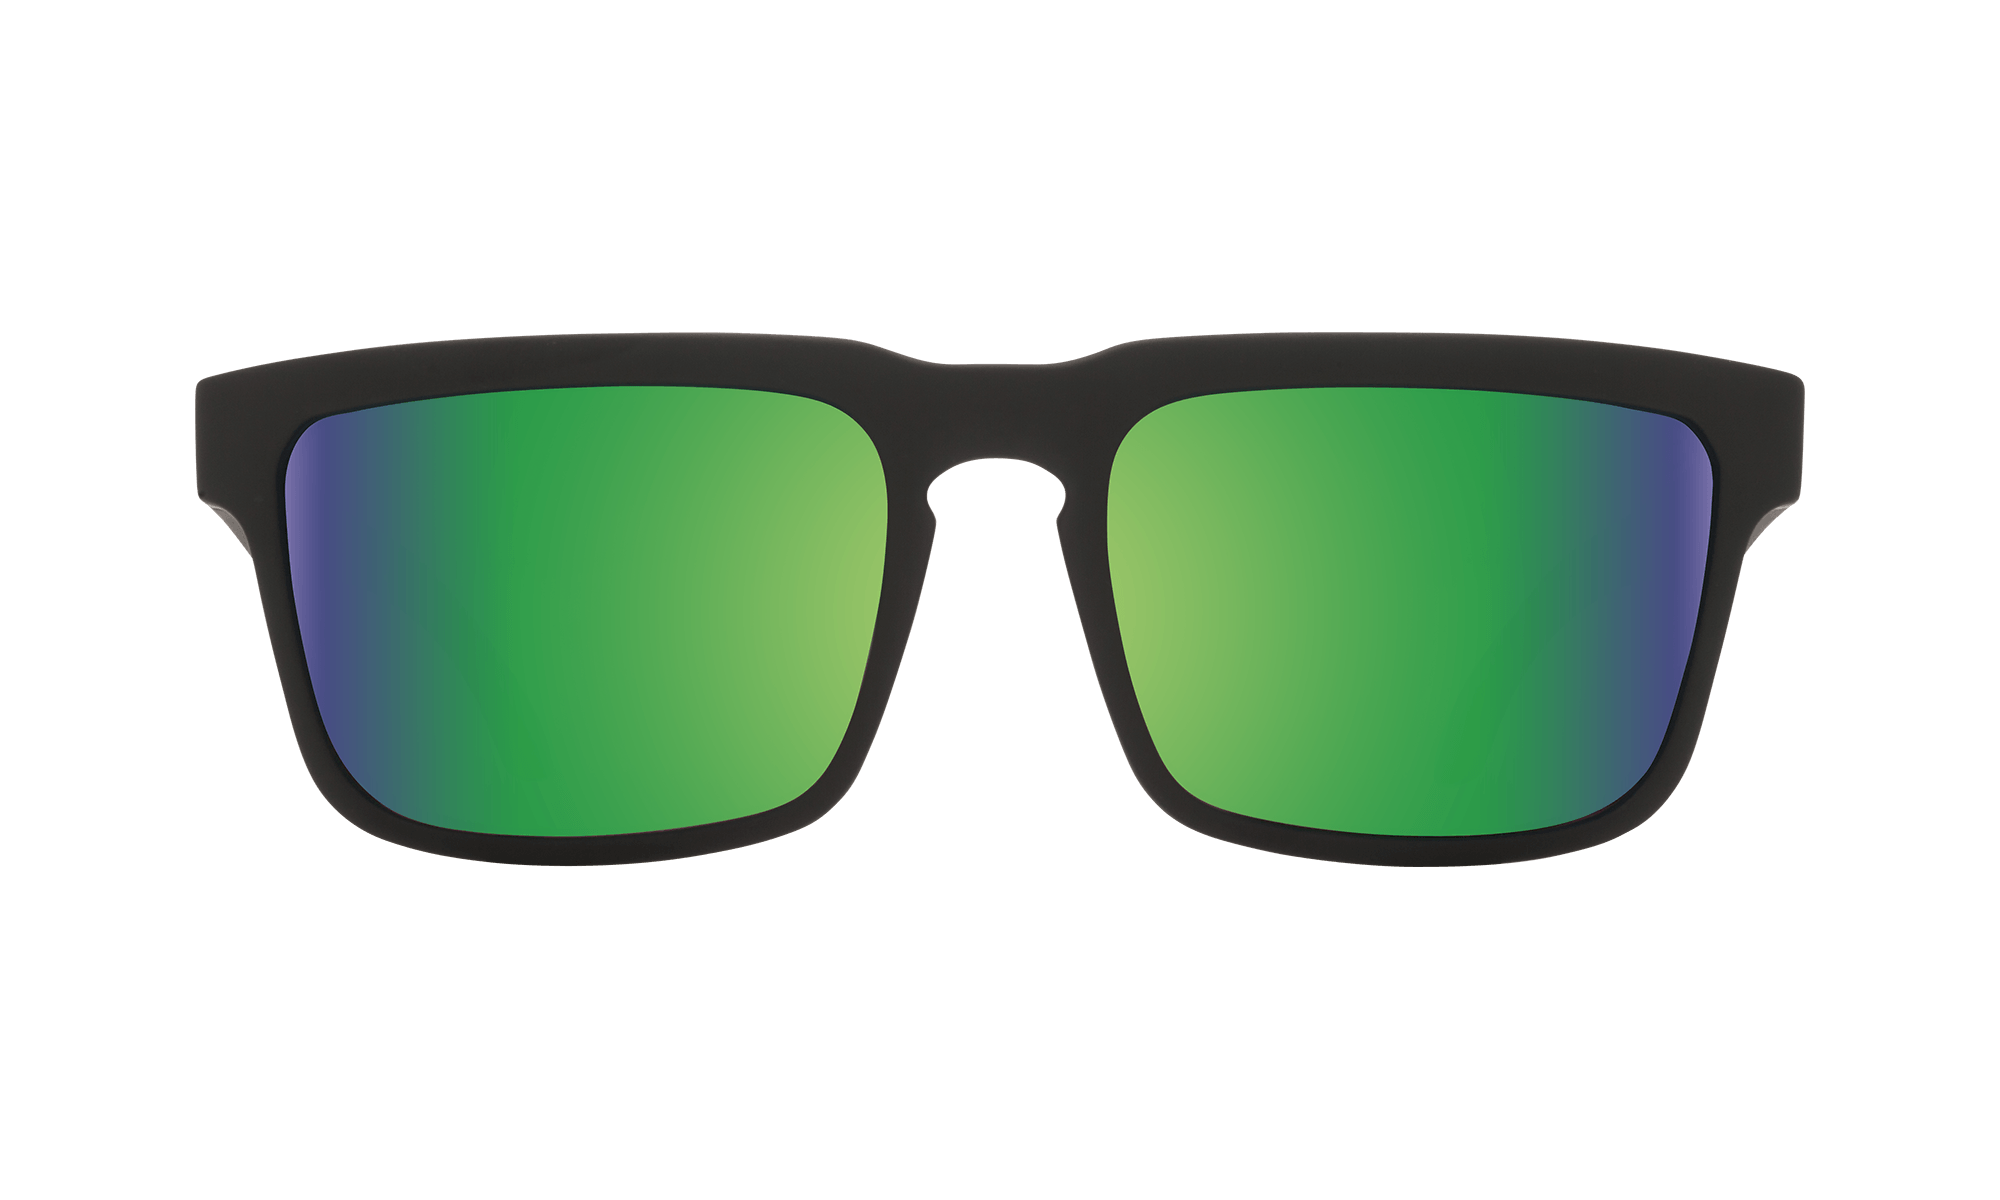 SPY Helm Matte Black - Happy Bronze With Green Spectra Mirror Polarized Sunglasses SUNGLASSES - Spy Sunglasses Spy 